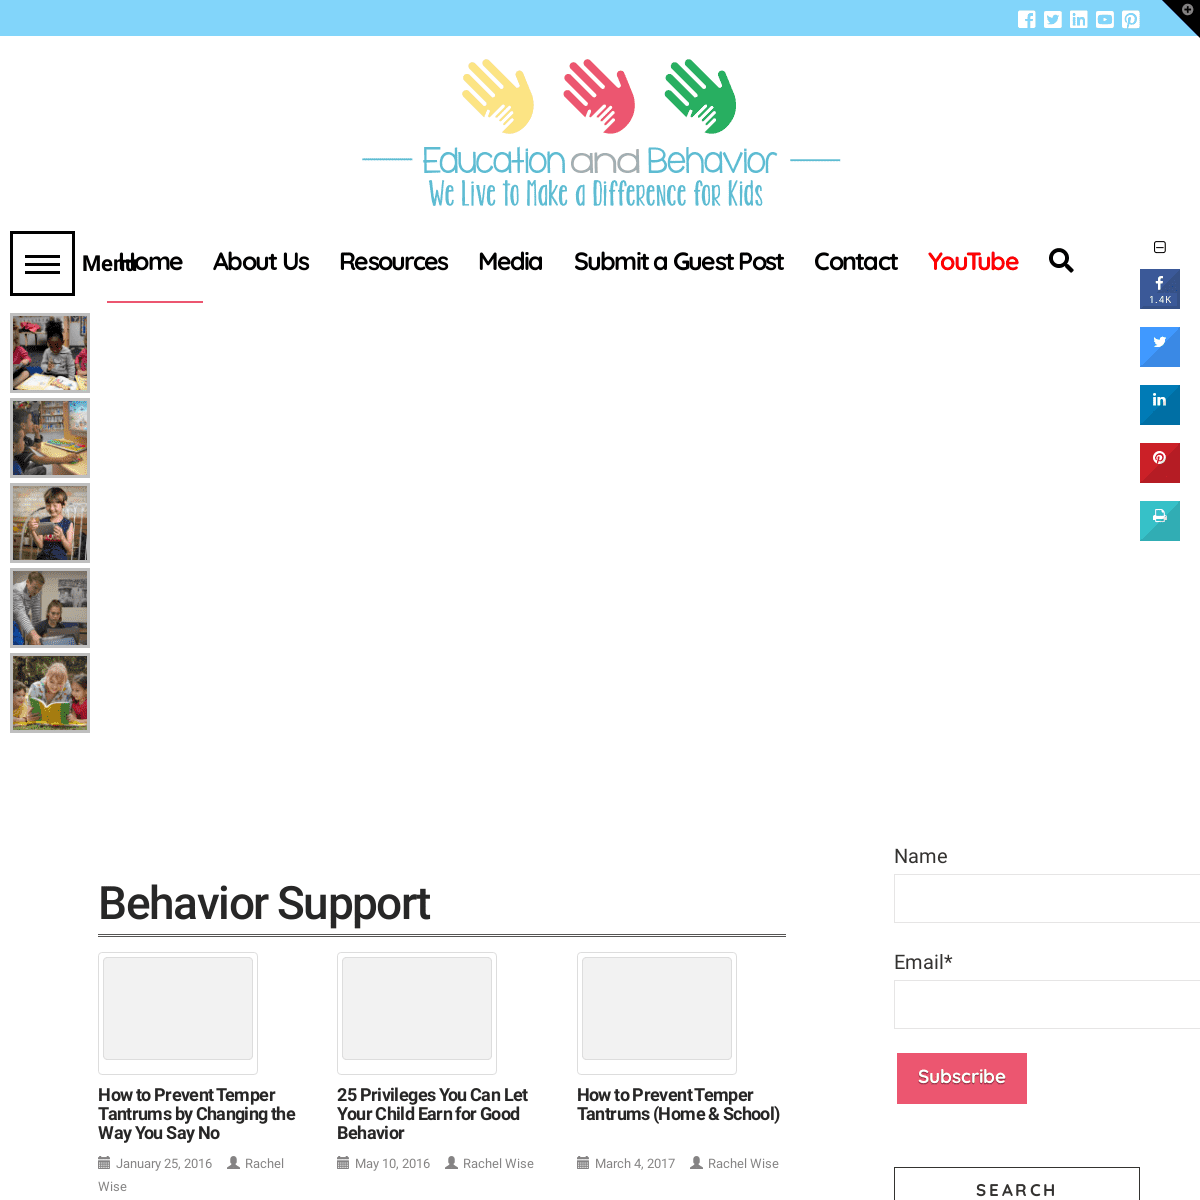 educationandbehavior.com - Learning & Behavior Support